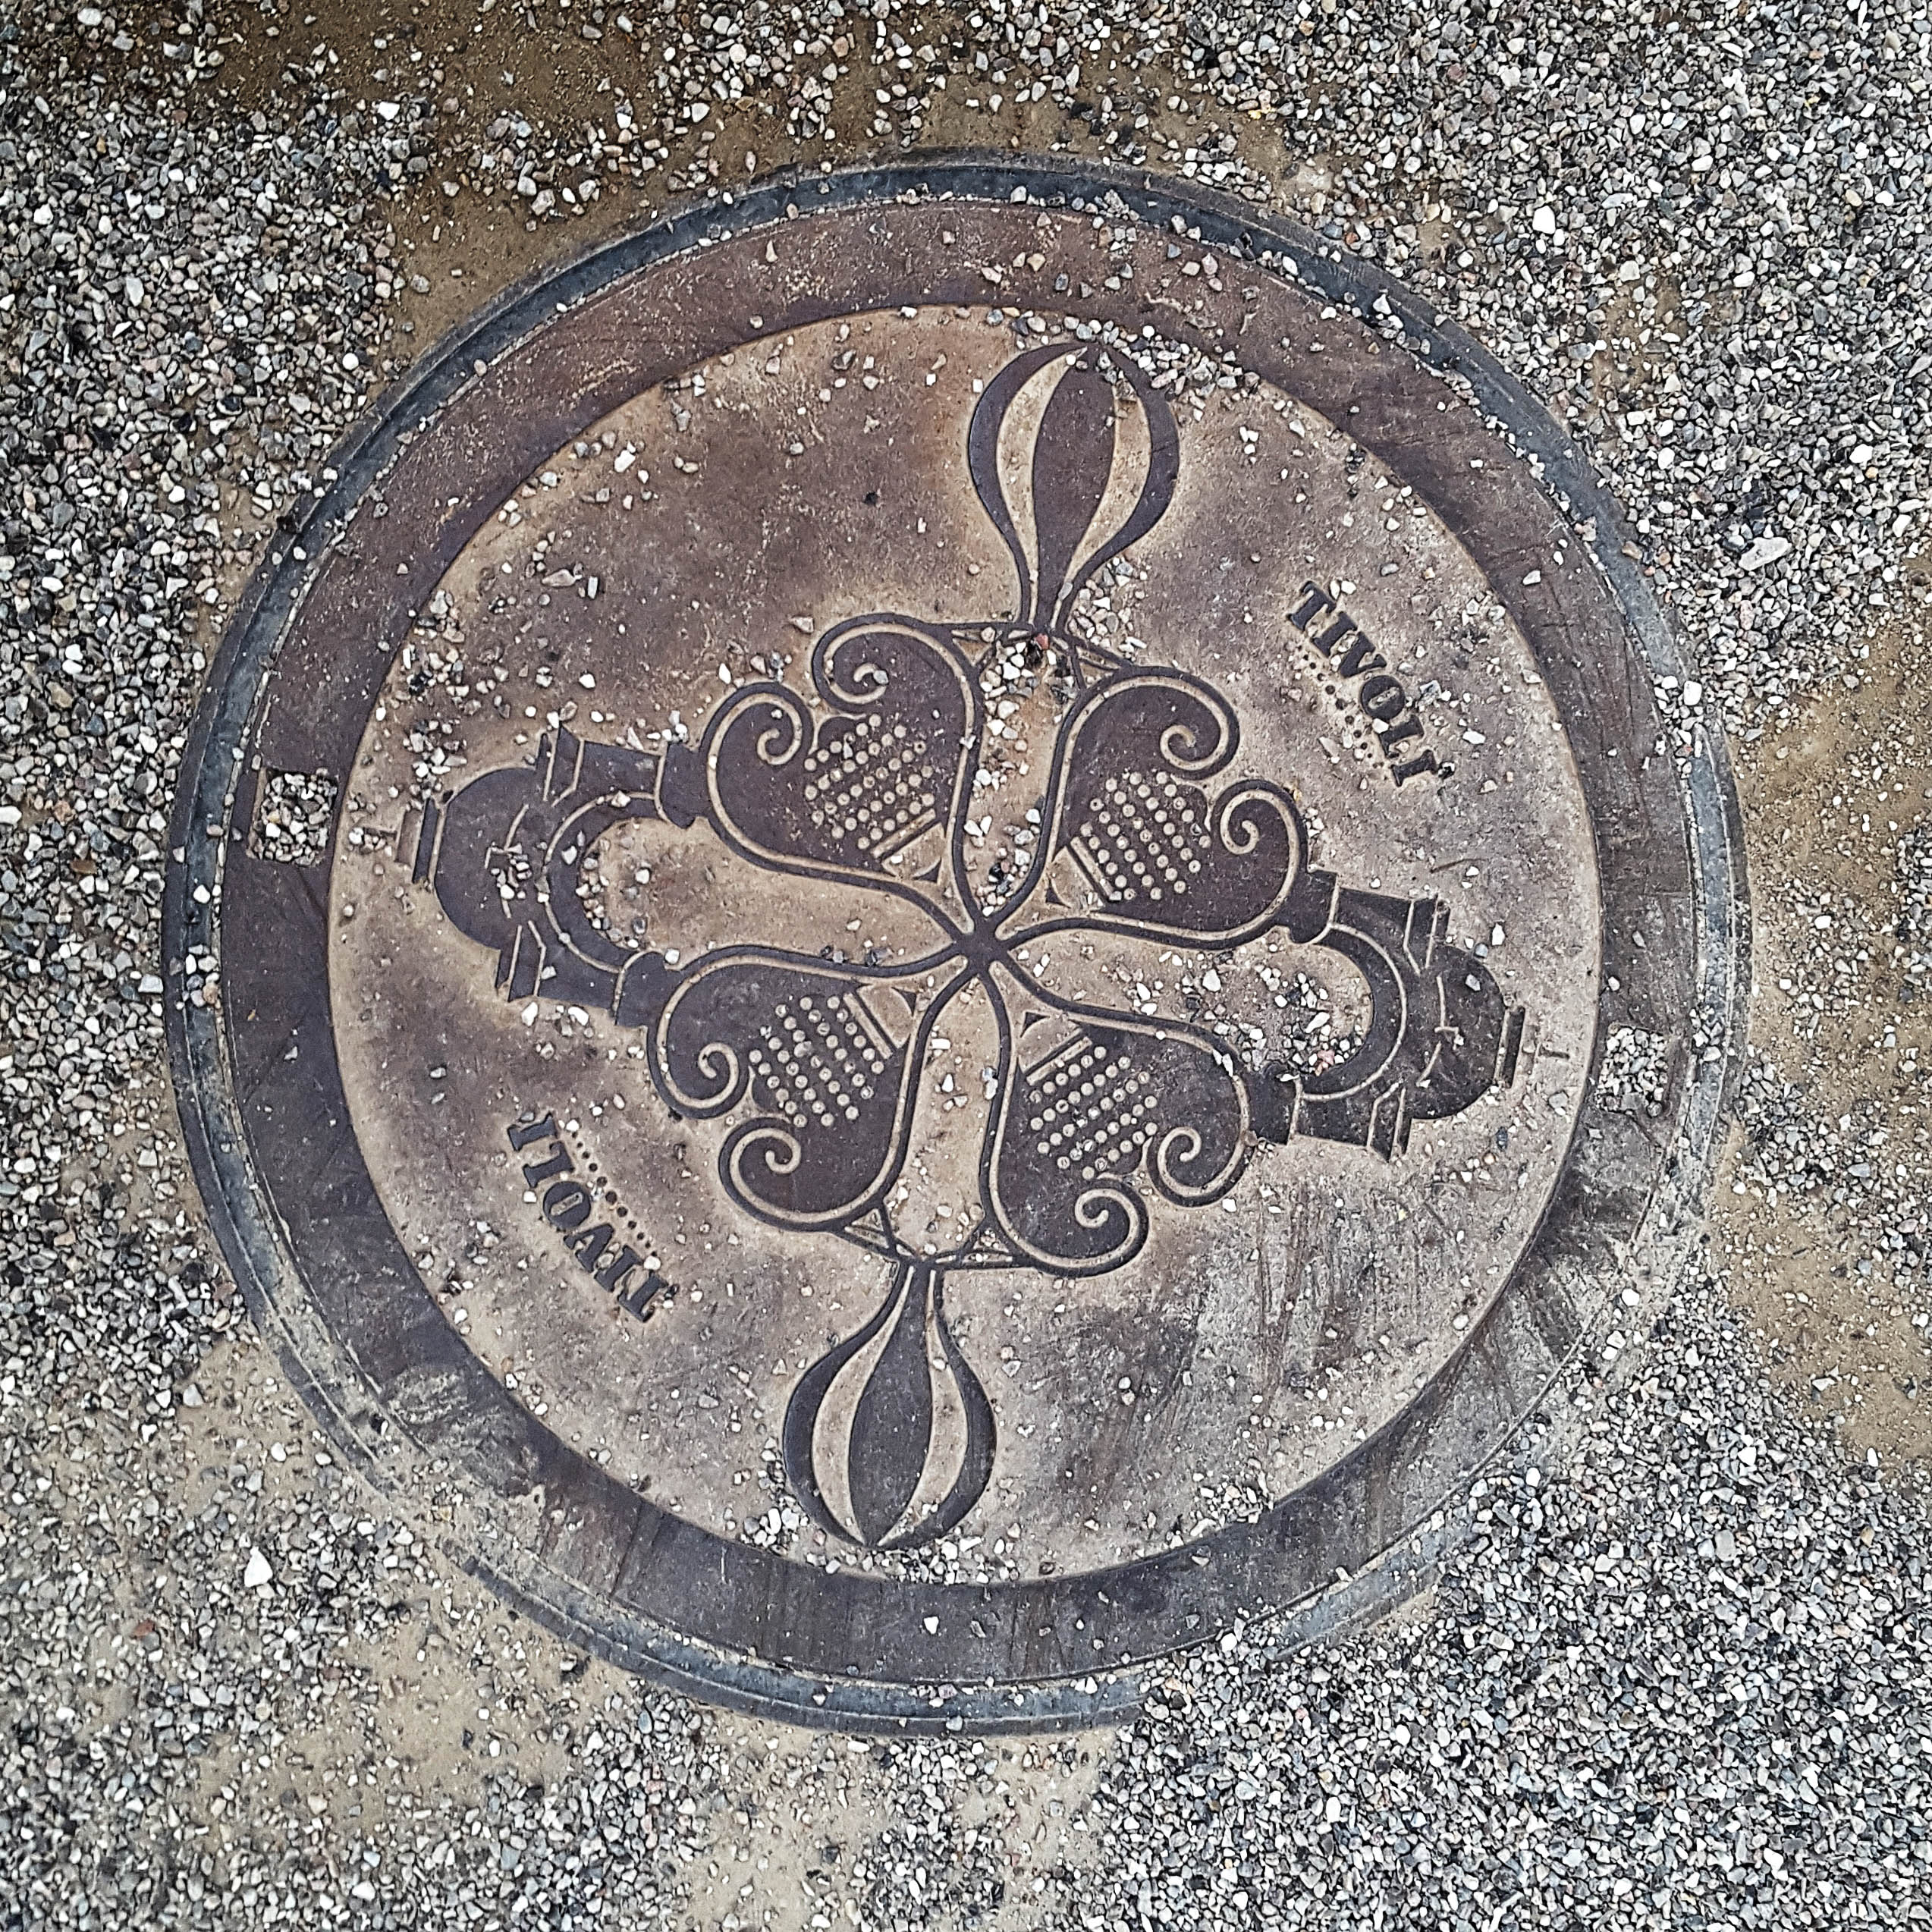 Manhole Cover, Copenhagen - Cast iron from Tivoli Gardens